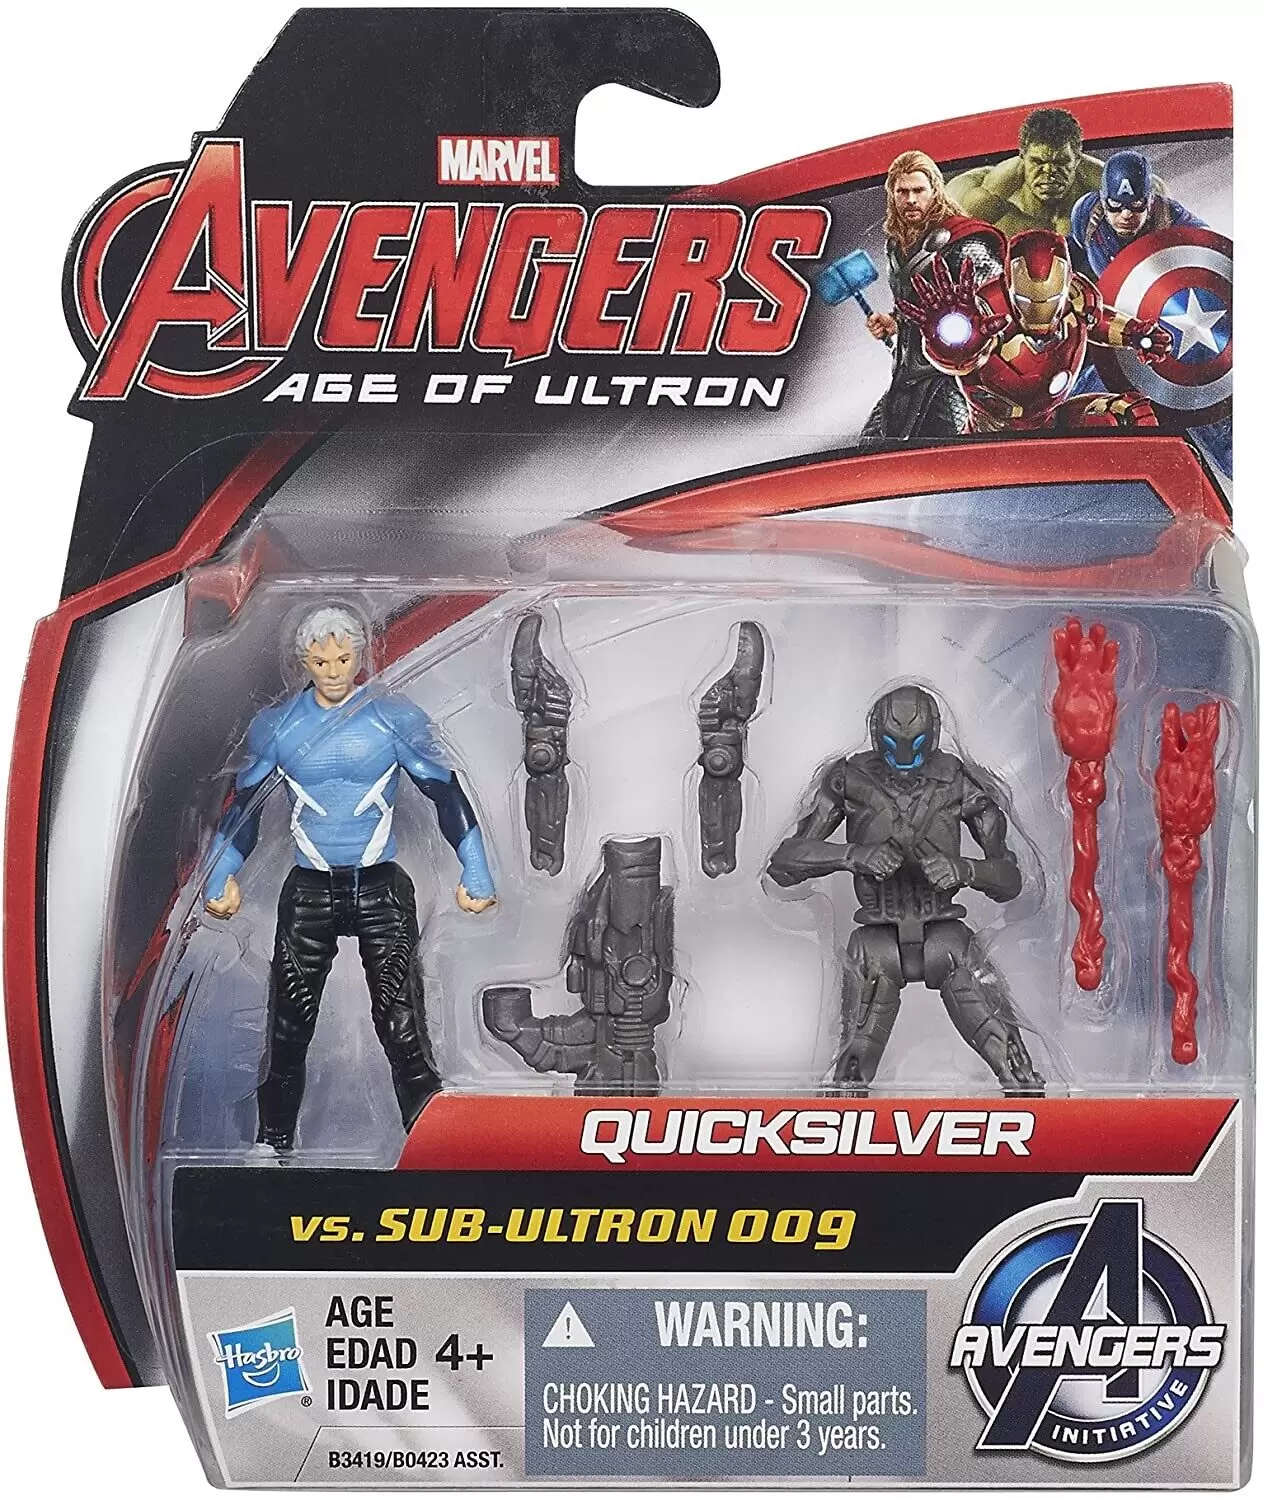 Avengers : Age of Ultron - Quicksilver vs Sub-Ultron 009